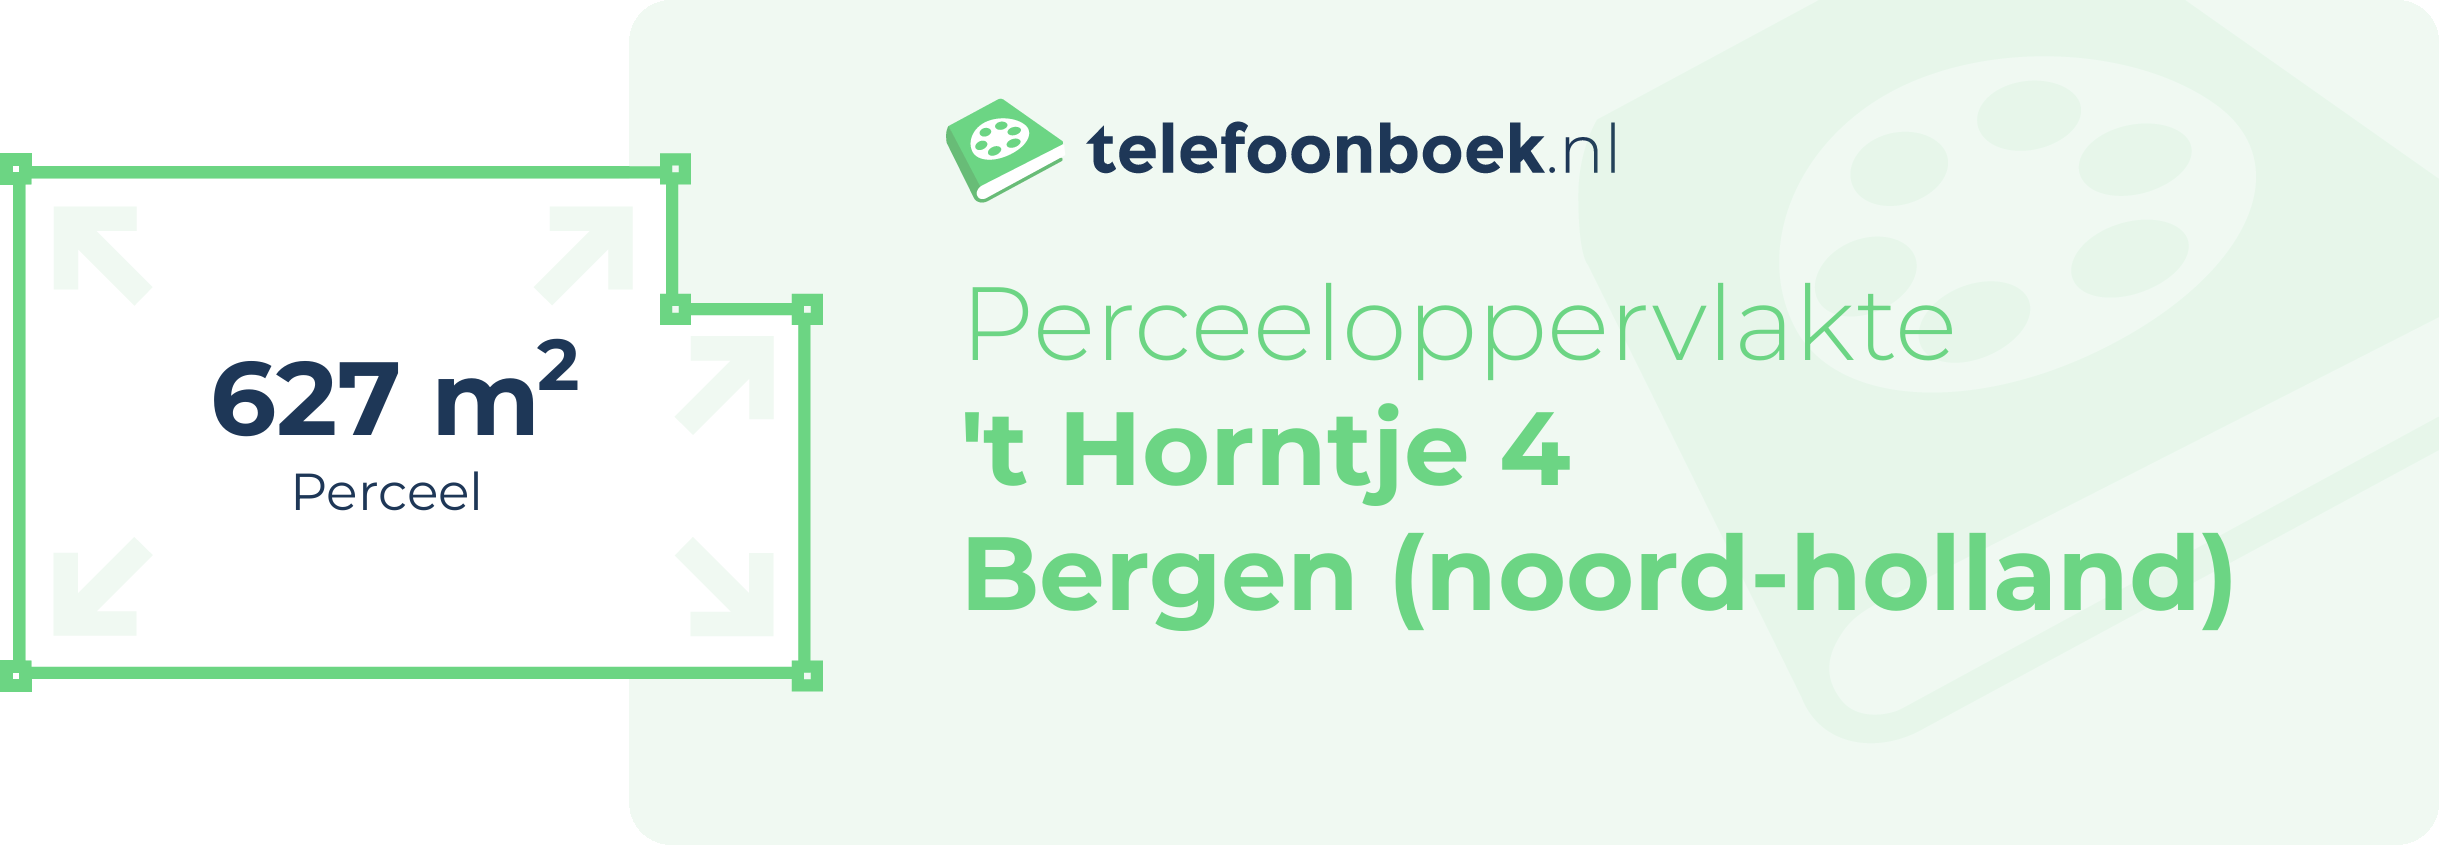 Perceeloppervlakte 't Horntje 4 Bergen (Noord-Holland)